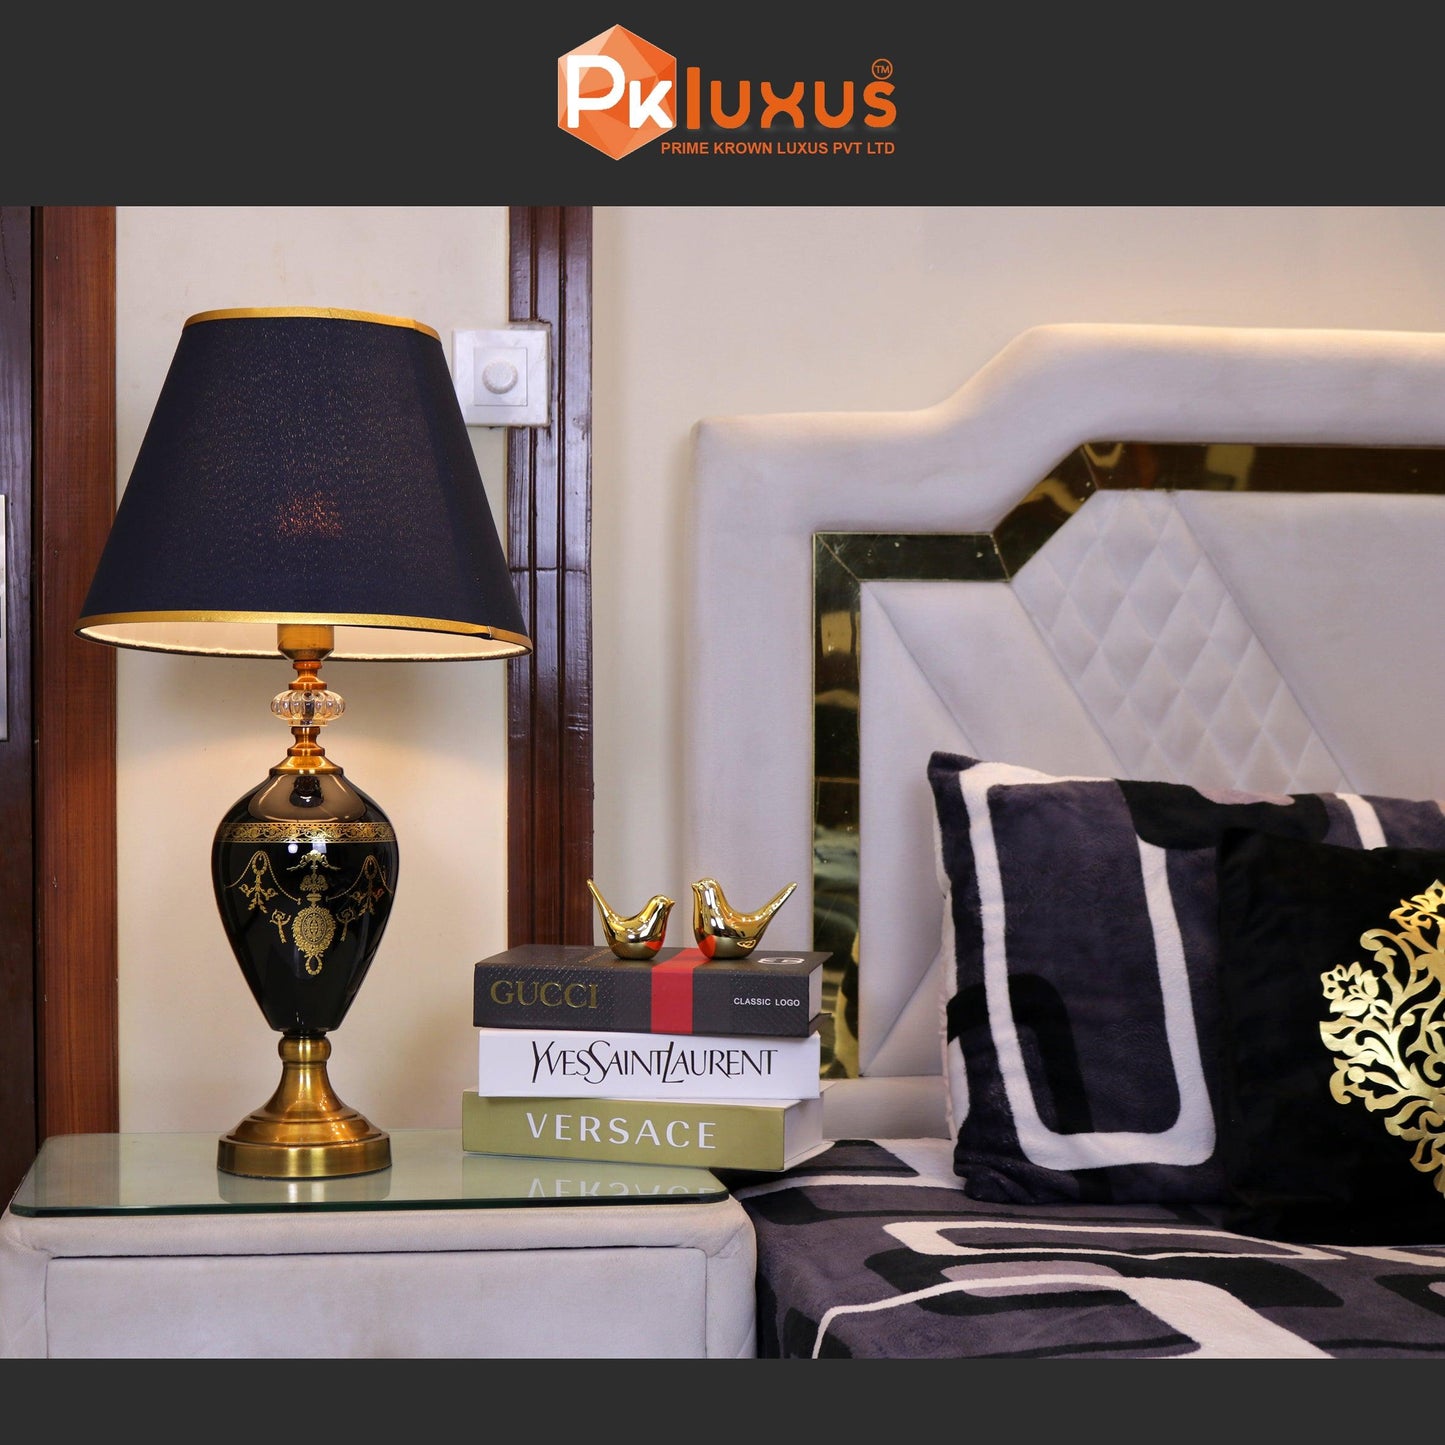 Luxury Black & Gold Arabic Design Table Lamp | PK LUXUS™ - PK LUXUS